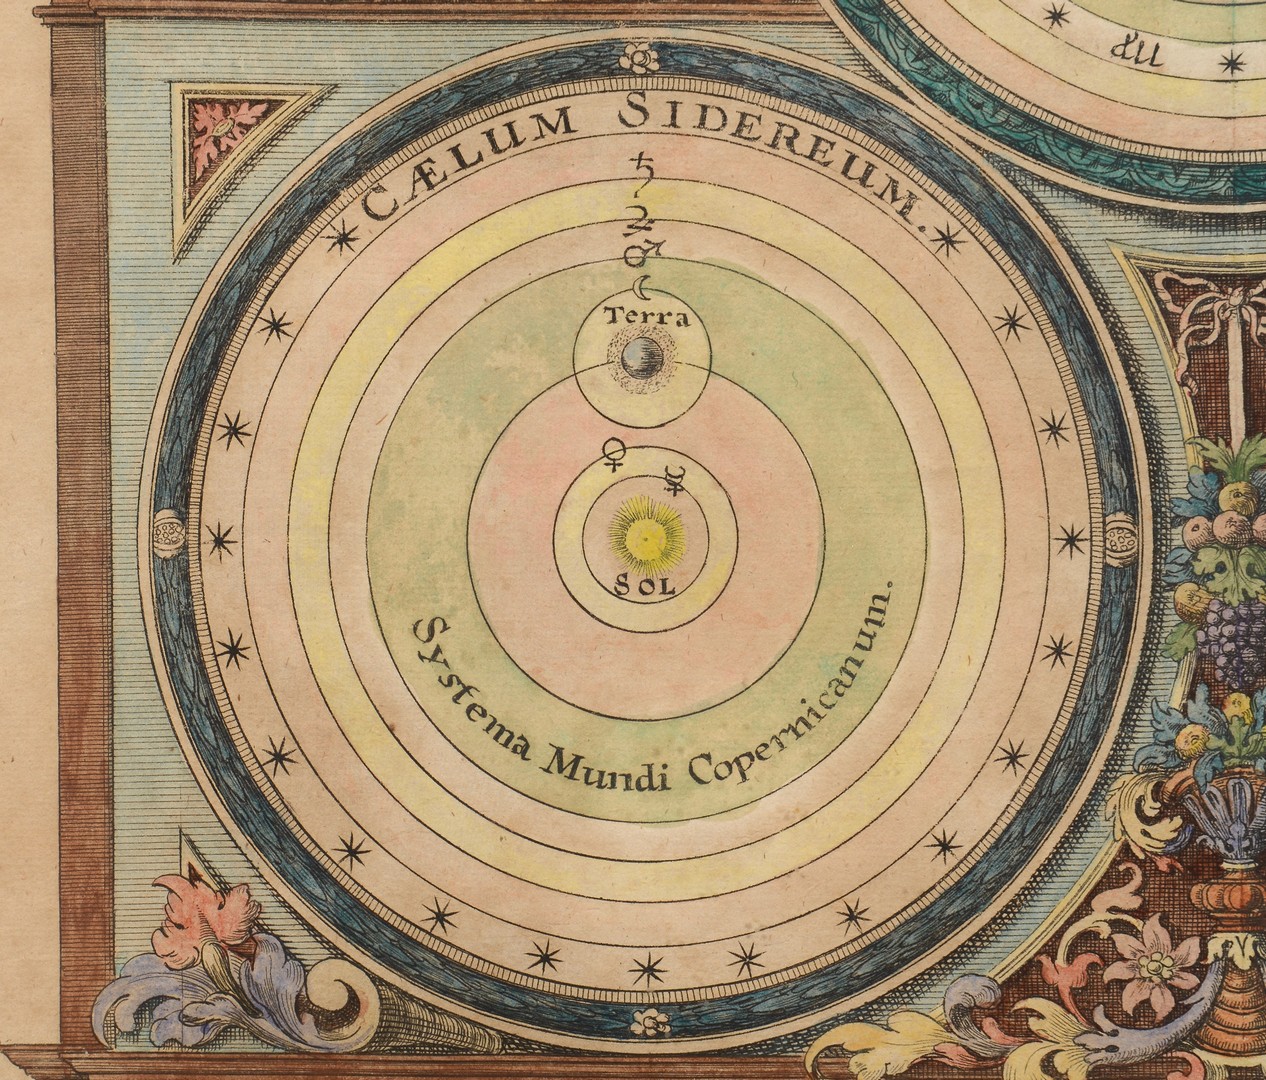 Lot 240: Pair of Baroque Astronomical Charts, Johann Zahn